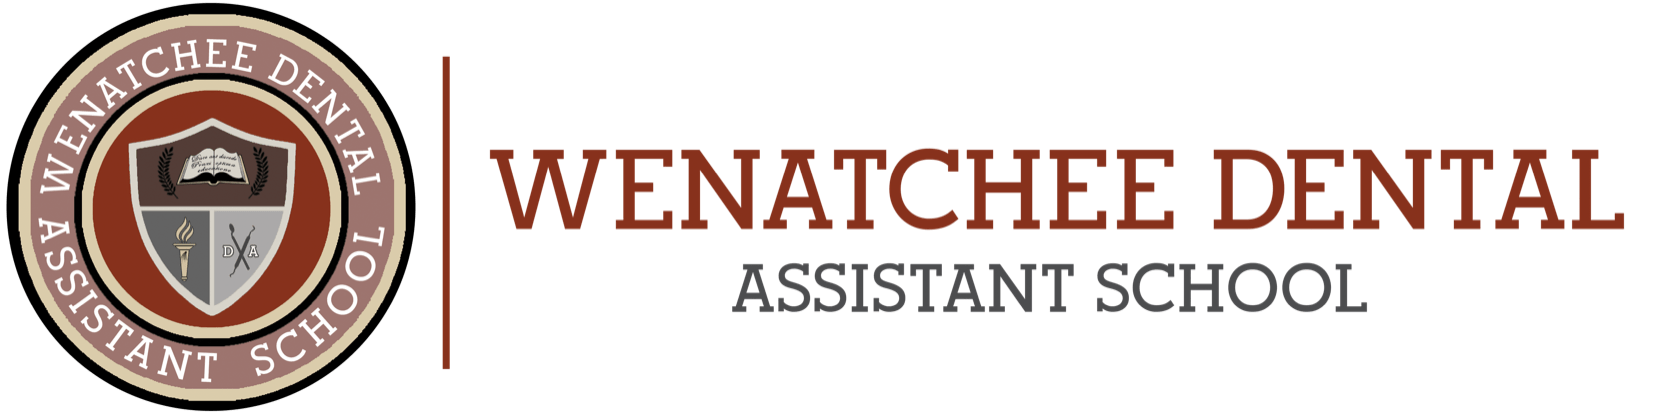 Wenatchee Dental Assistant School Logo